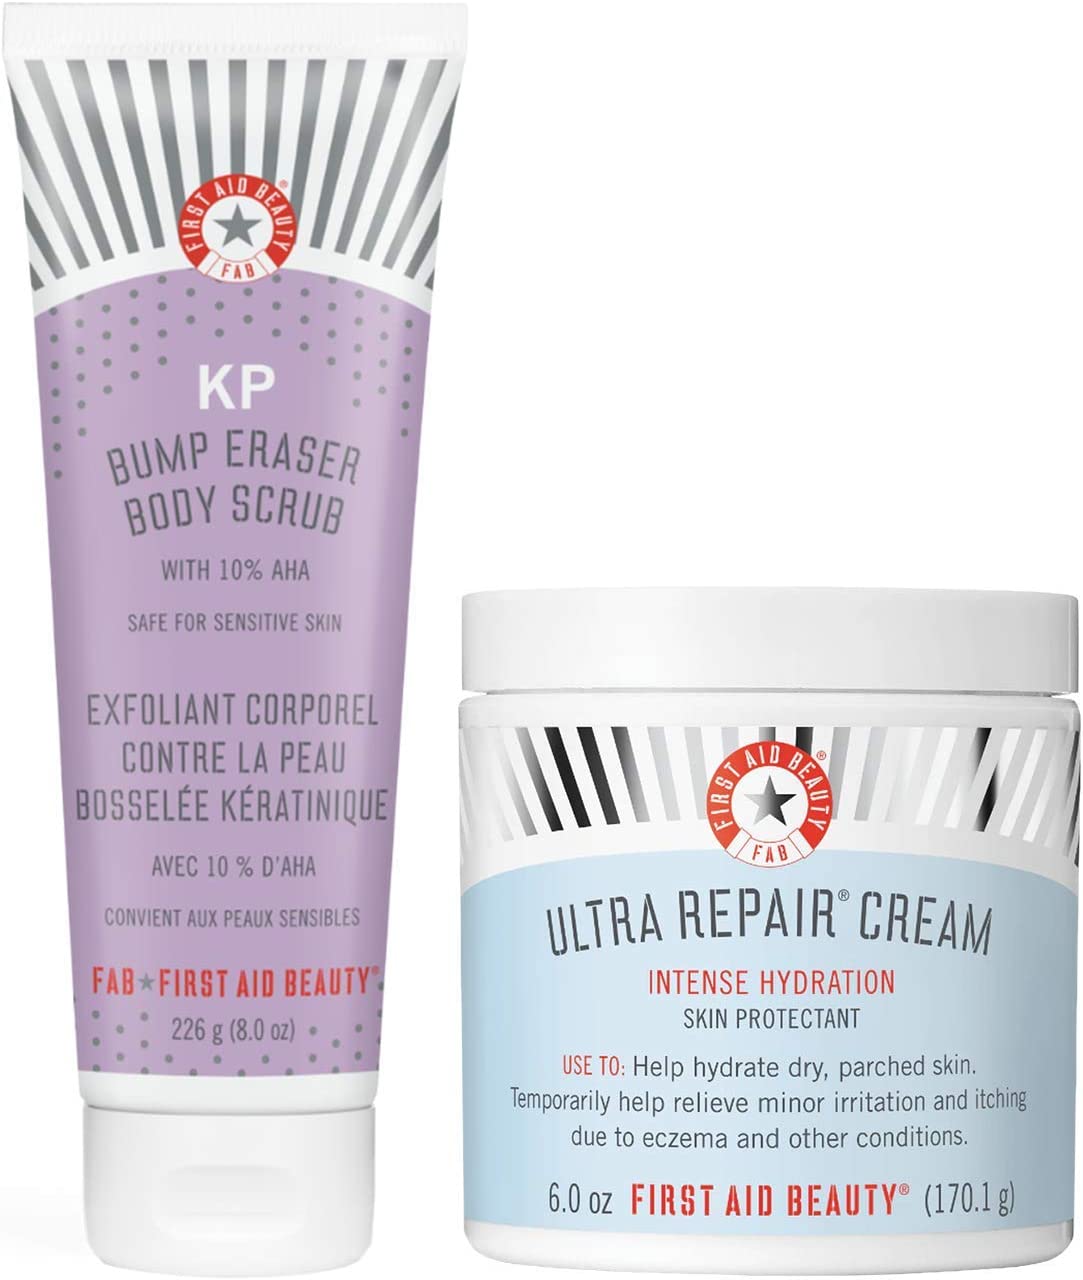 First Aid Beauty Bundle: KP Bump Eraser Body Scrub with 10% AHA and Ultra Repair Cream Intense Hydration Moisturizer